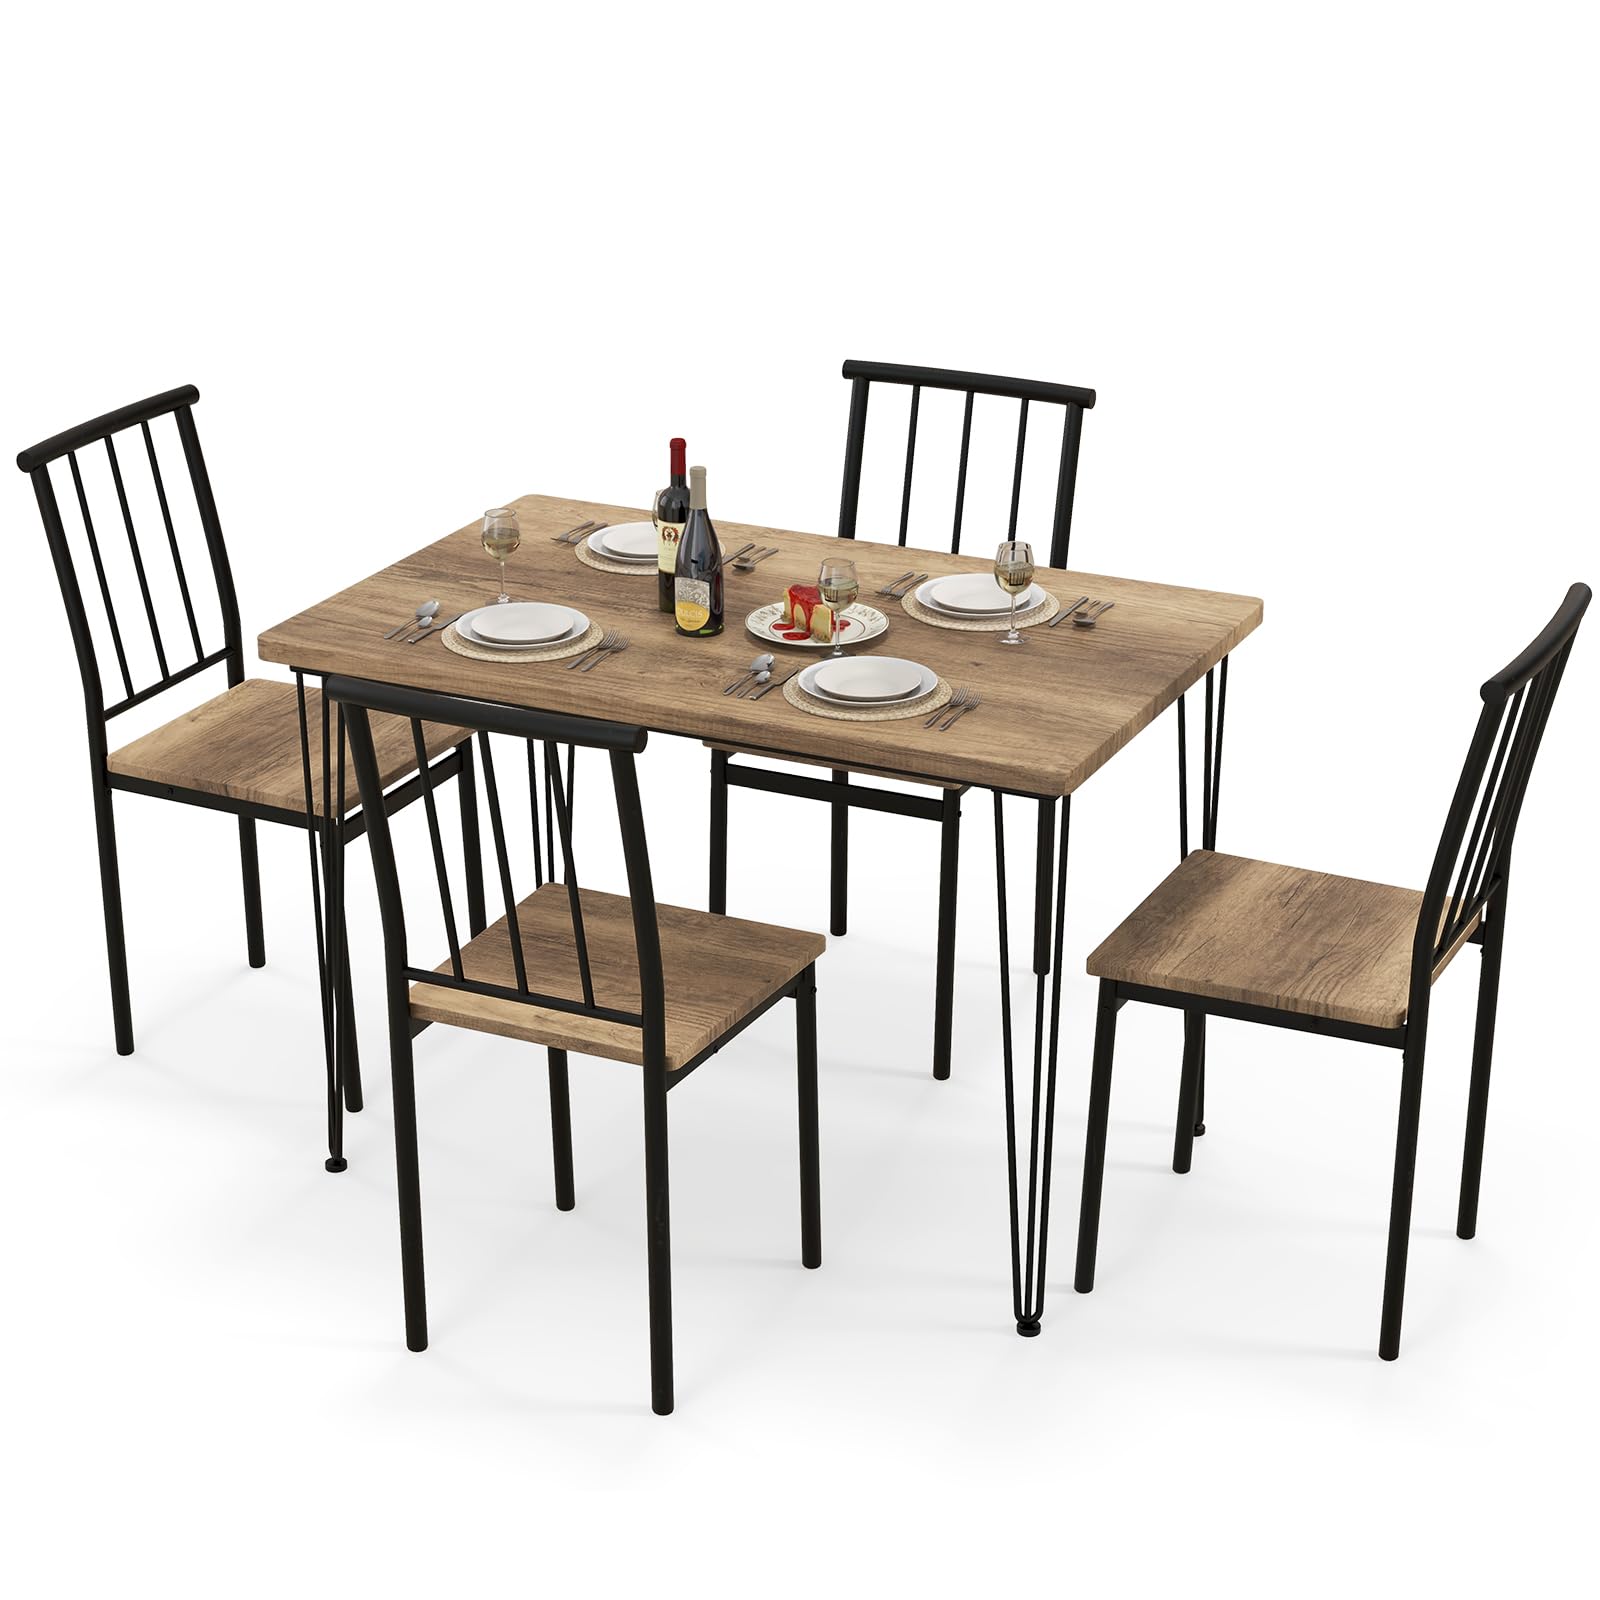 Giantex 5-Piece Dining Table Set